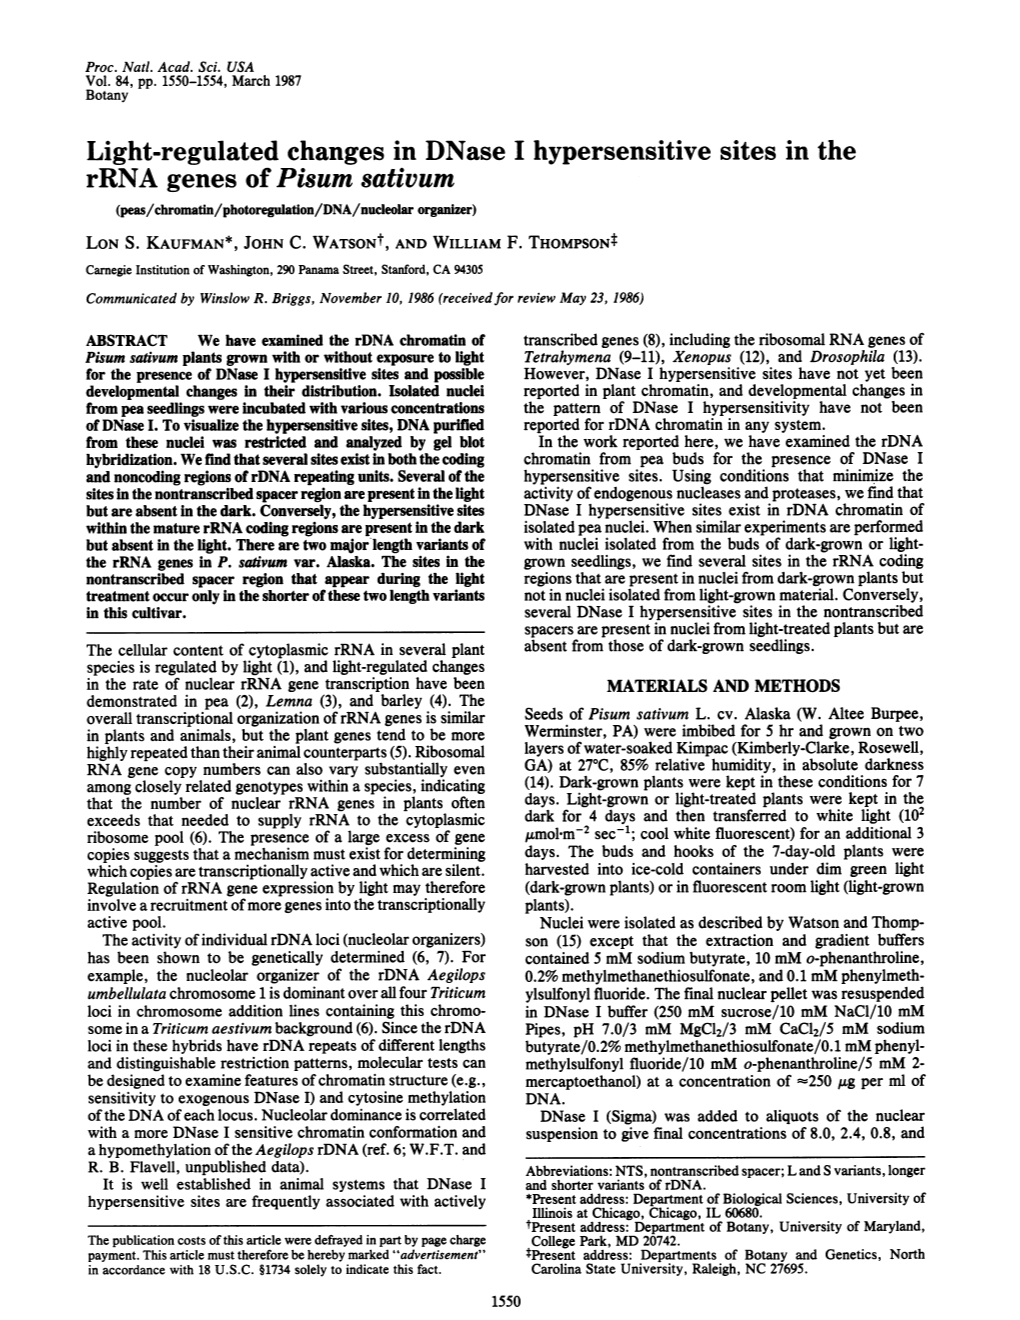 Light-Regulated Changes in Dnase I Hypersensitive Sites in the Rrna Genes of Pisum Sativum (Peas/Chromatin/Photoregulation/DNA/Nucleolar Organizer) LON S